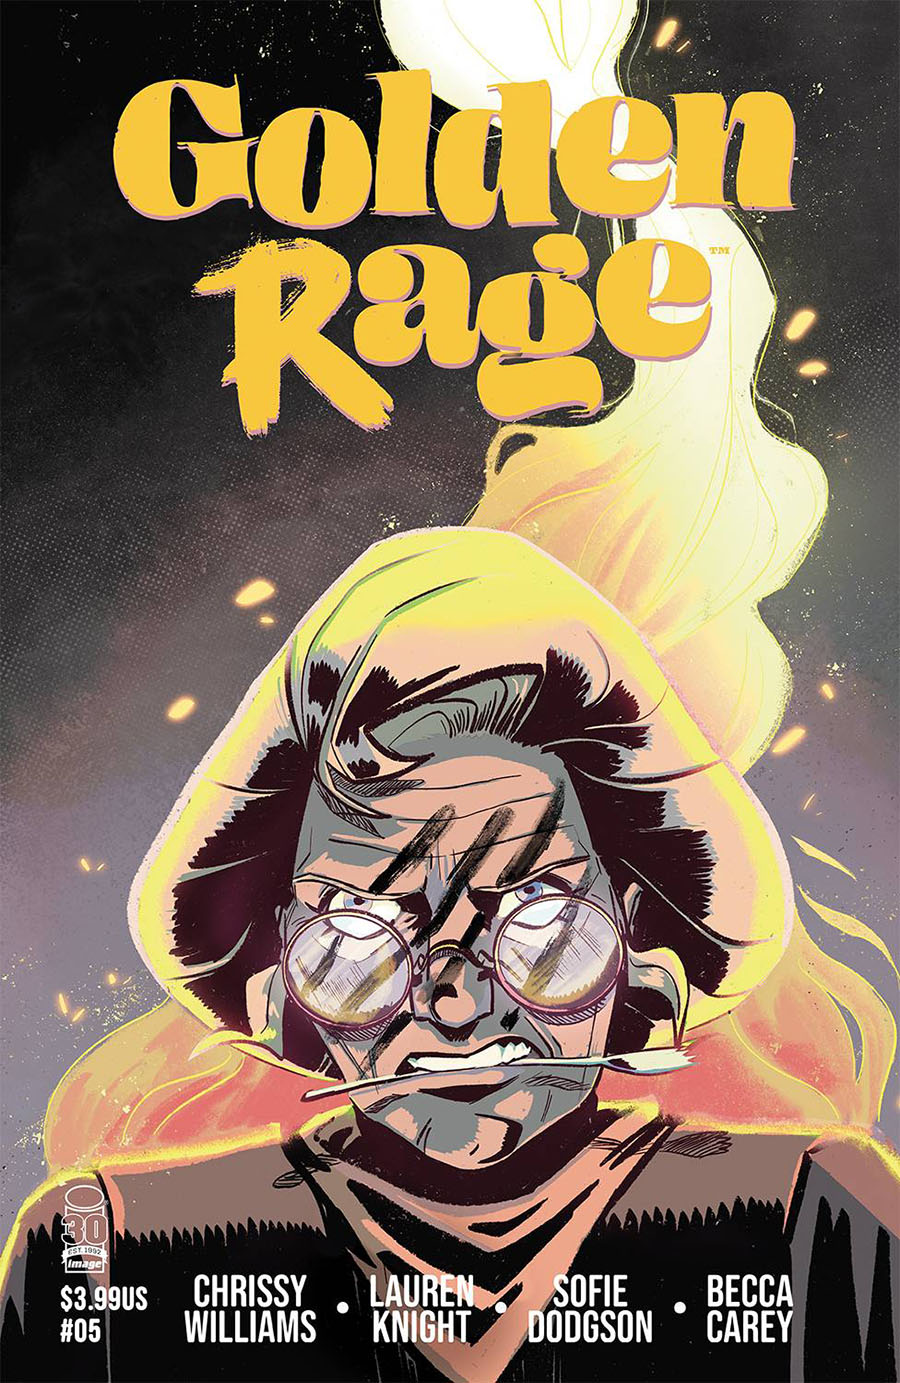 Golden Rage #5 Cover A Regular Lauren Knight Cover